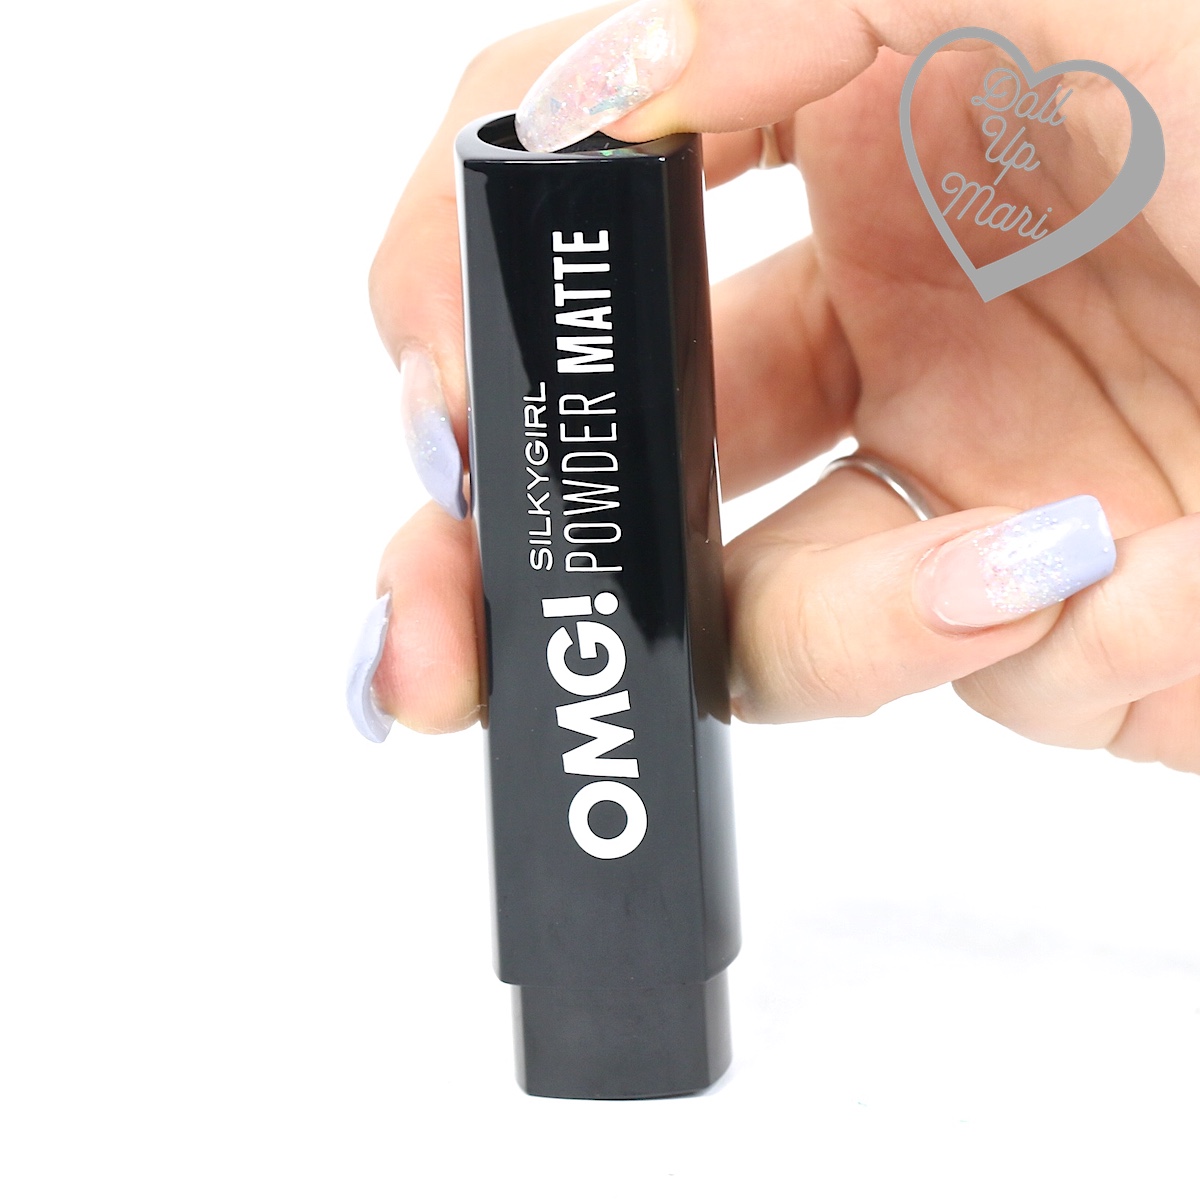 Silkygirl OMG! Powder Matte Lipcolor Lipstick casing when clicked